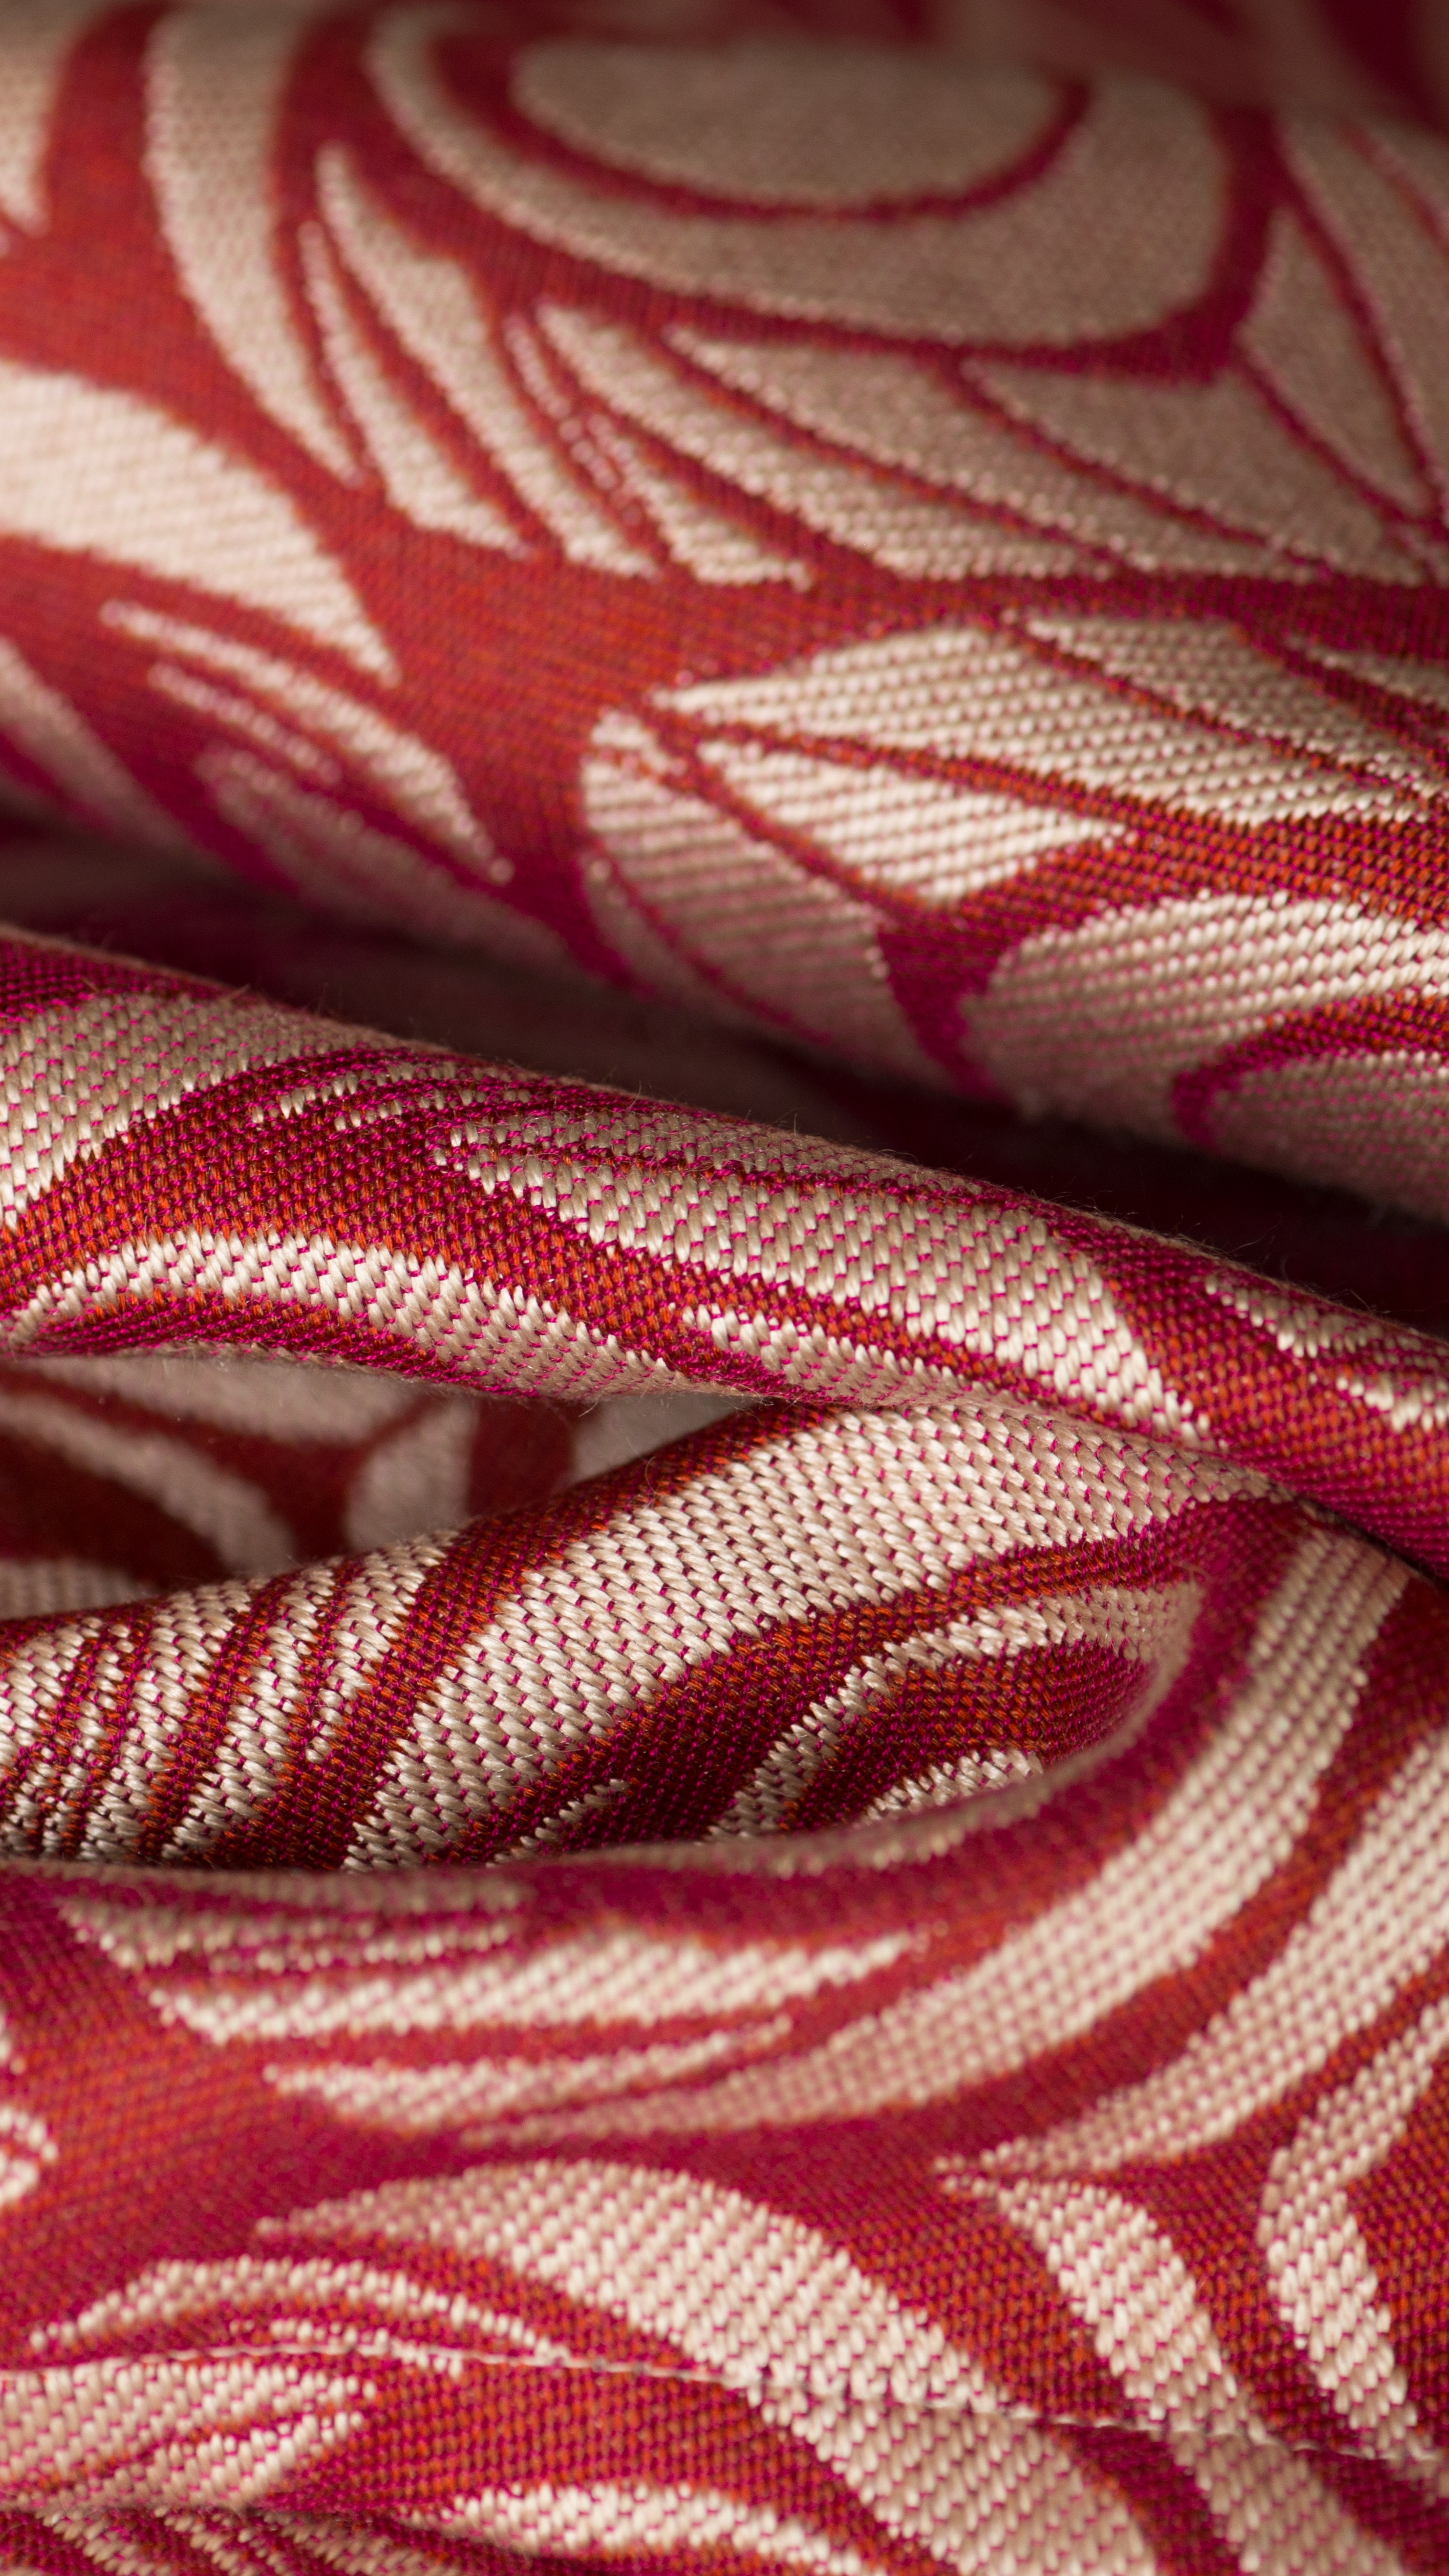 Artipoppe ARGUS DREAMTIME Wrap (mulberry silk, baby camel, merino, cashmere) Image